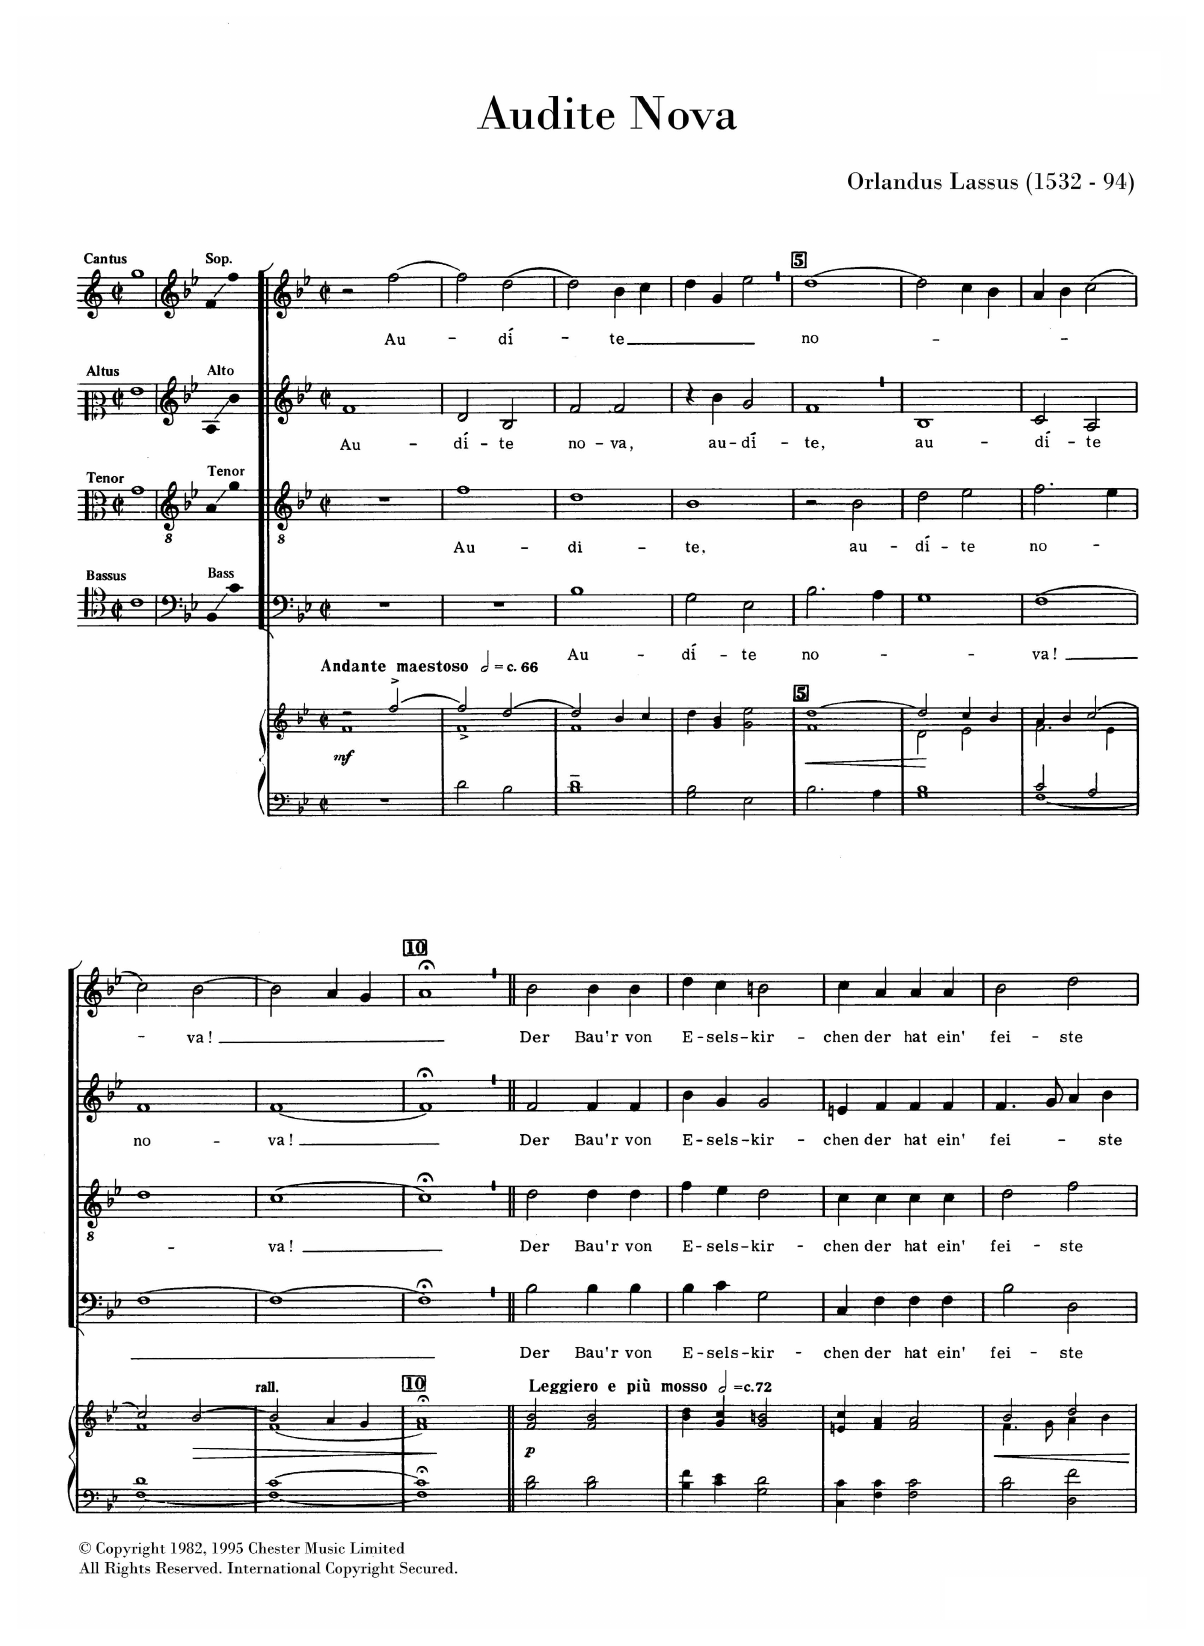 Orlandus Lassus Audite Nova sheet music notes and chords arranged for SATB Choir